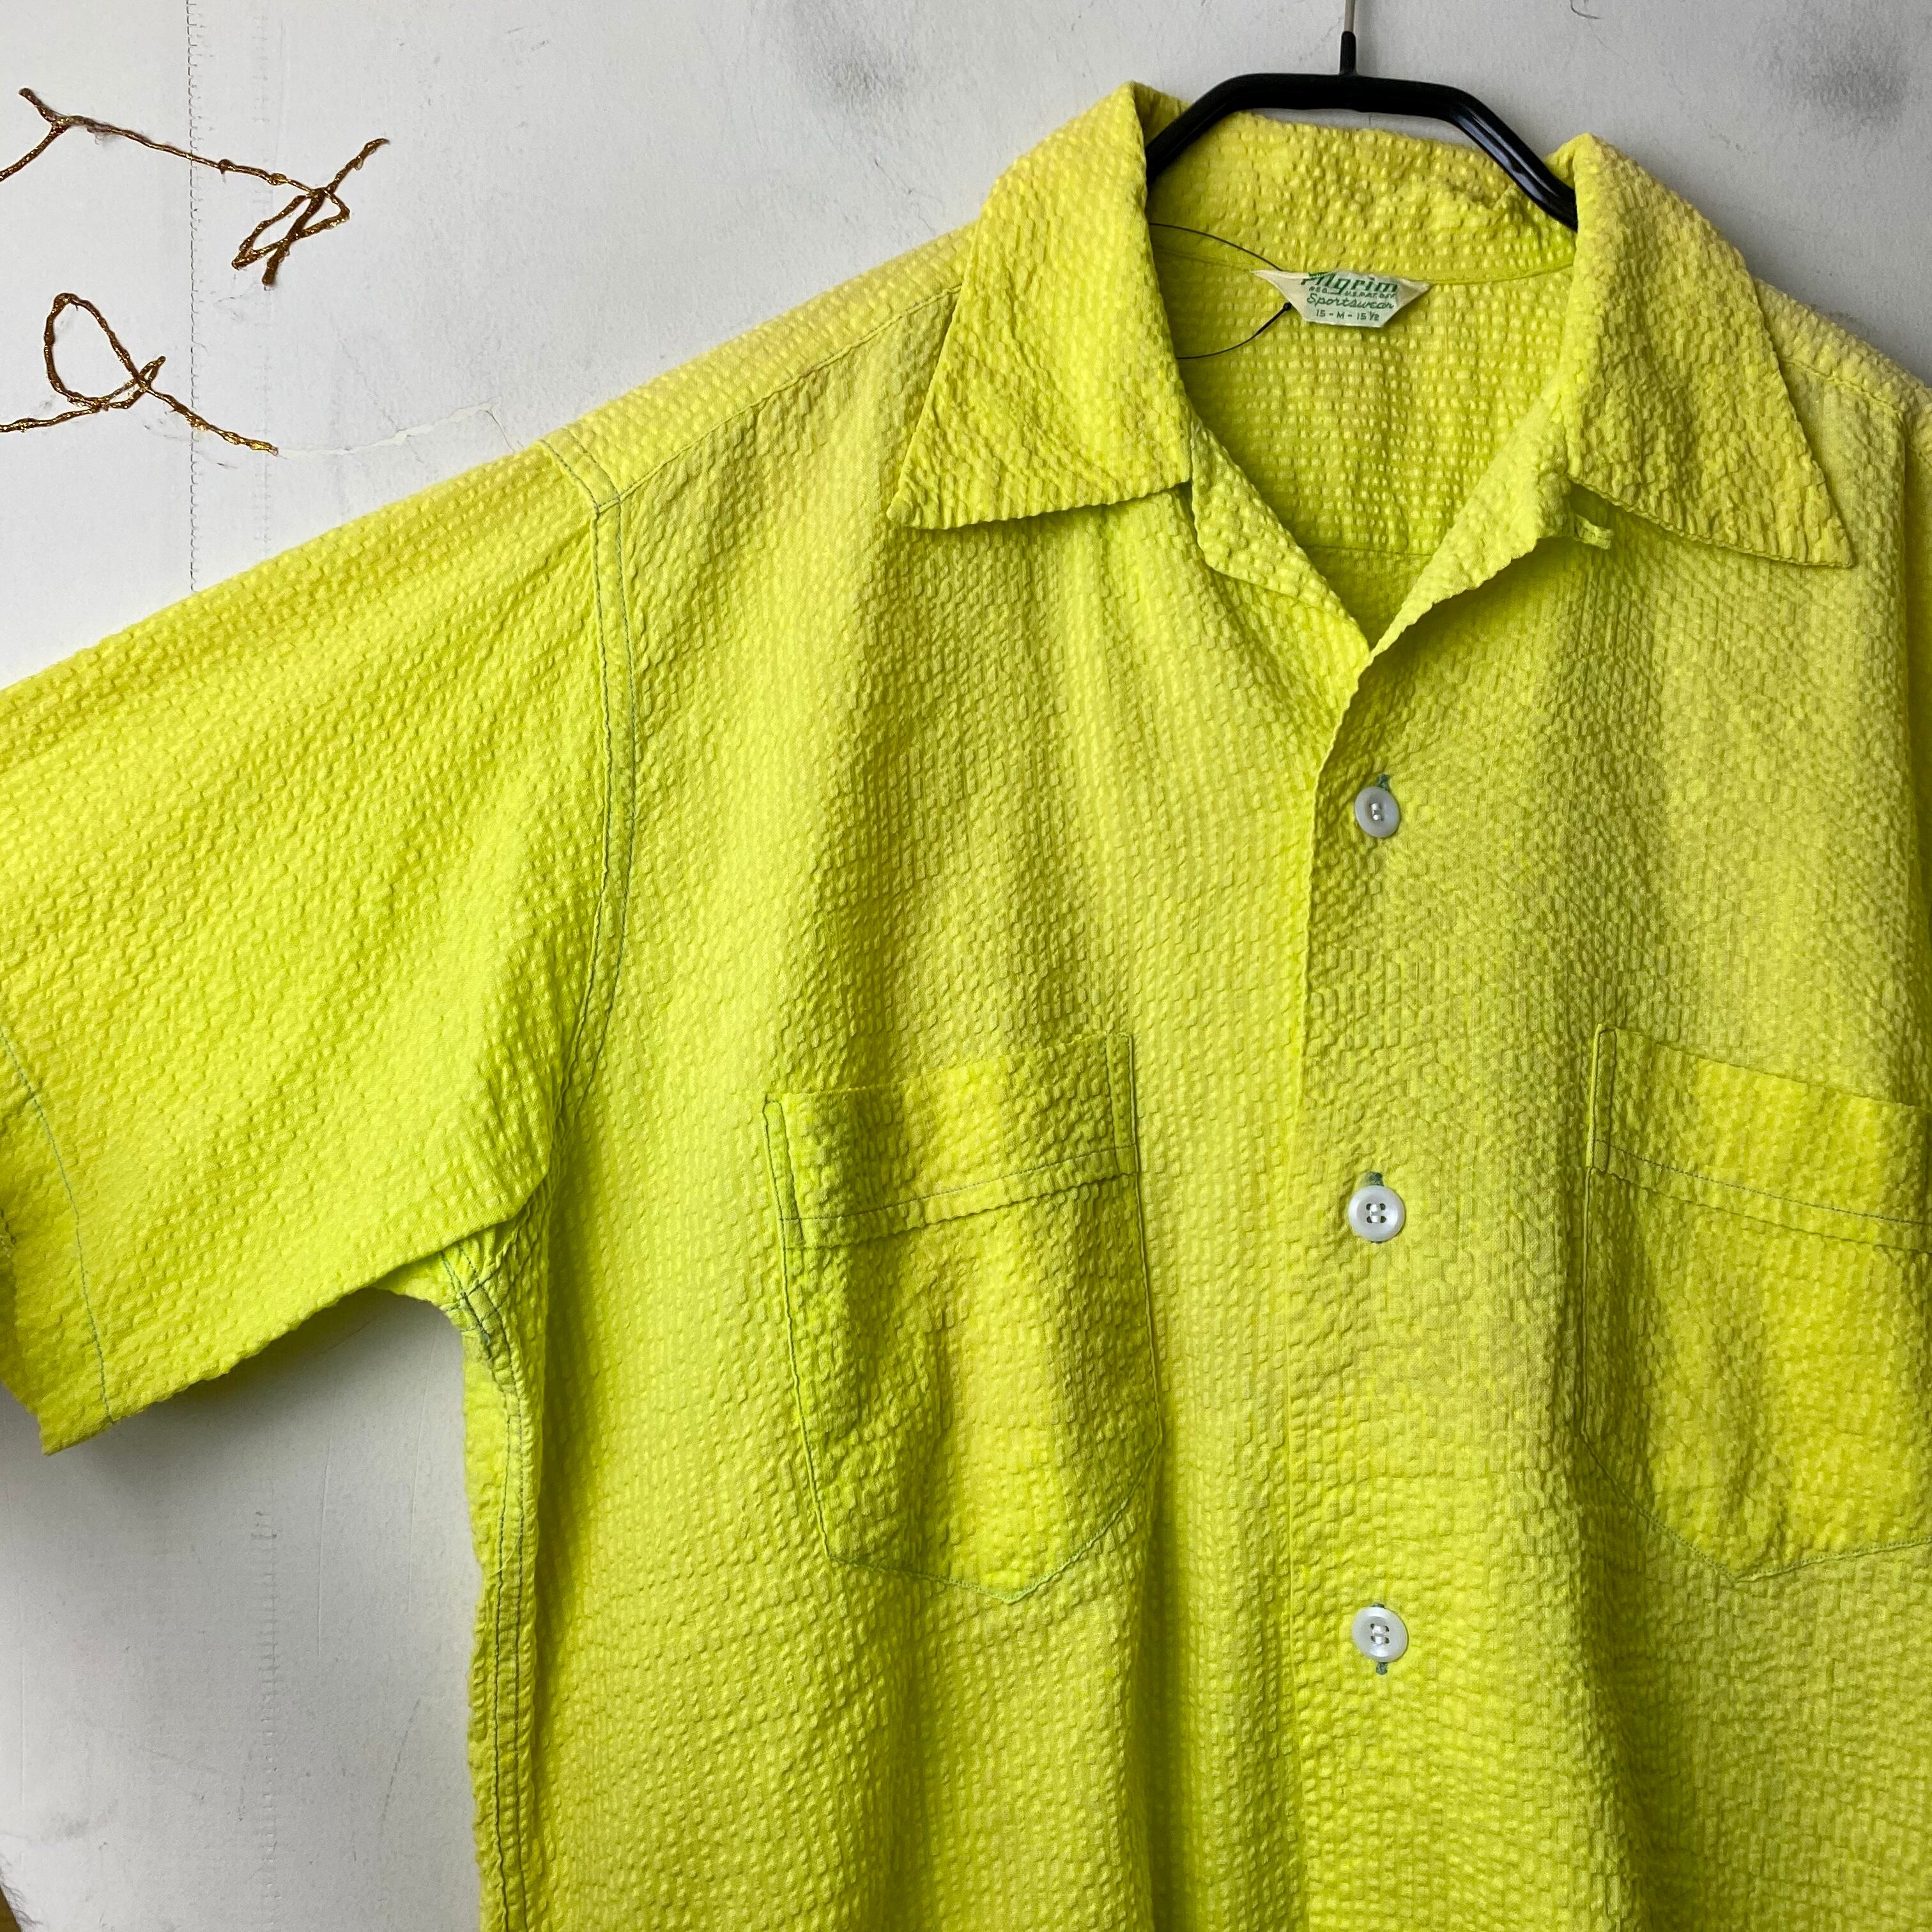 【ORVIS】 vintage seersucker shirt